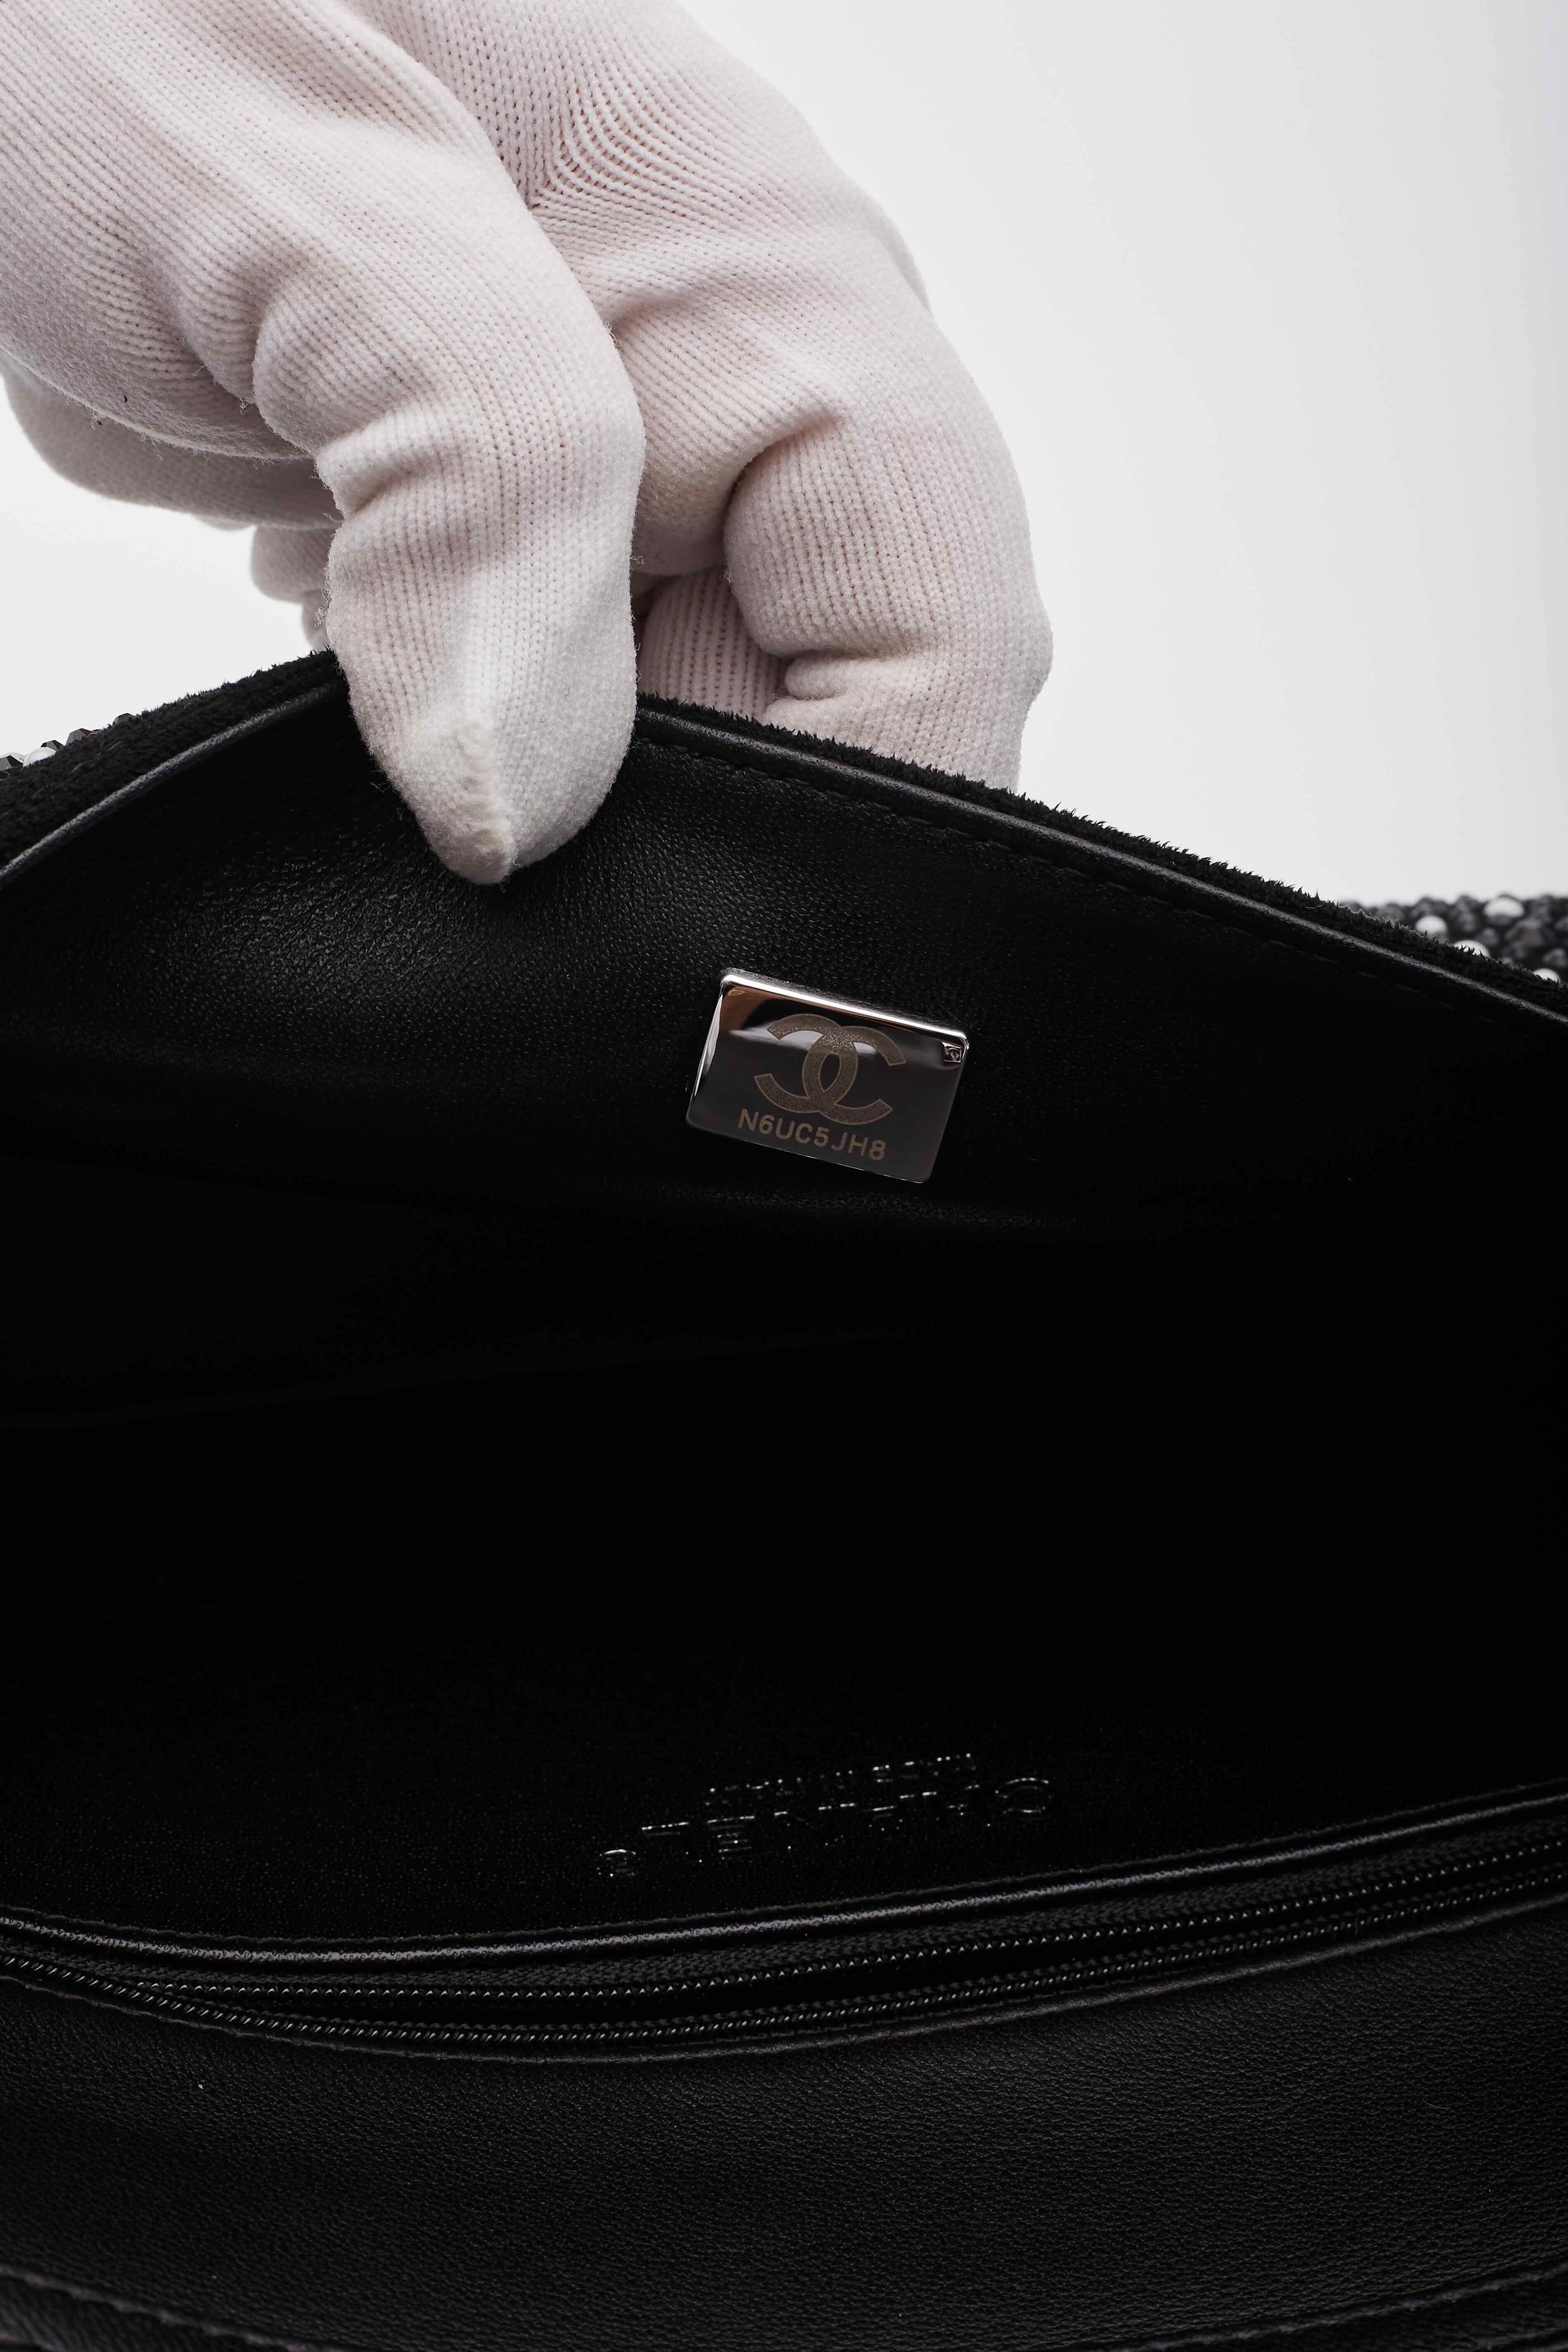 Chanel Strass Crystal Pearls & Ruthenium Metal Shoulder Bag Black & White 5